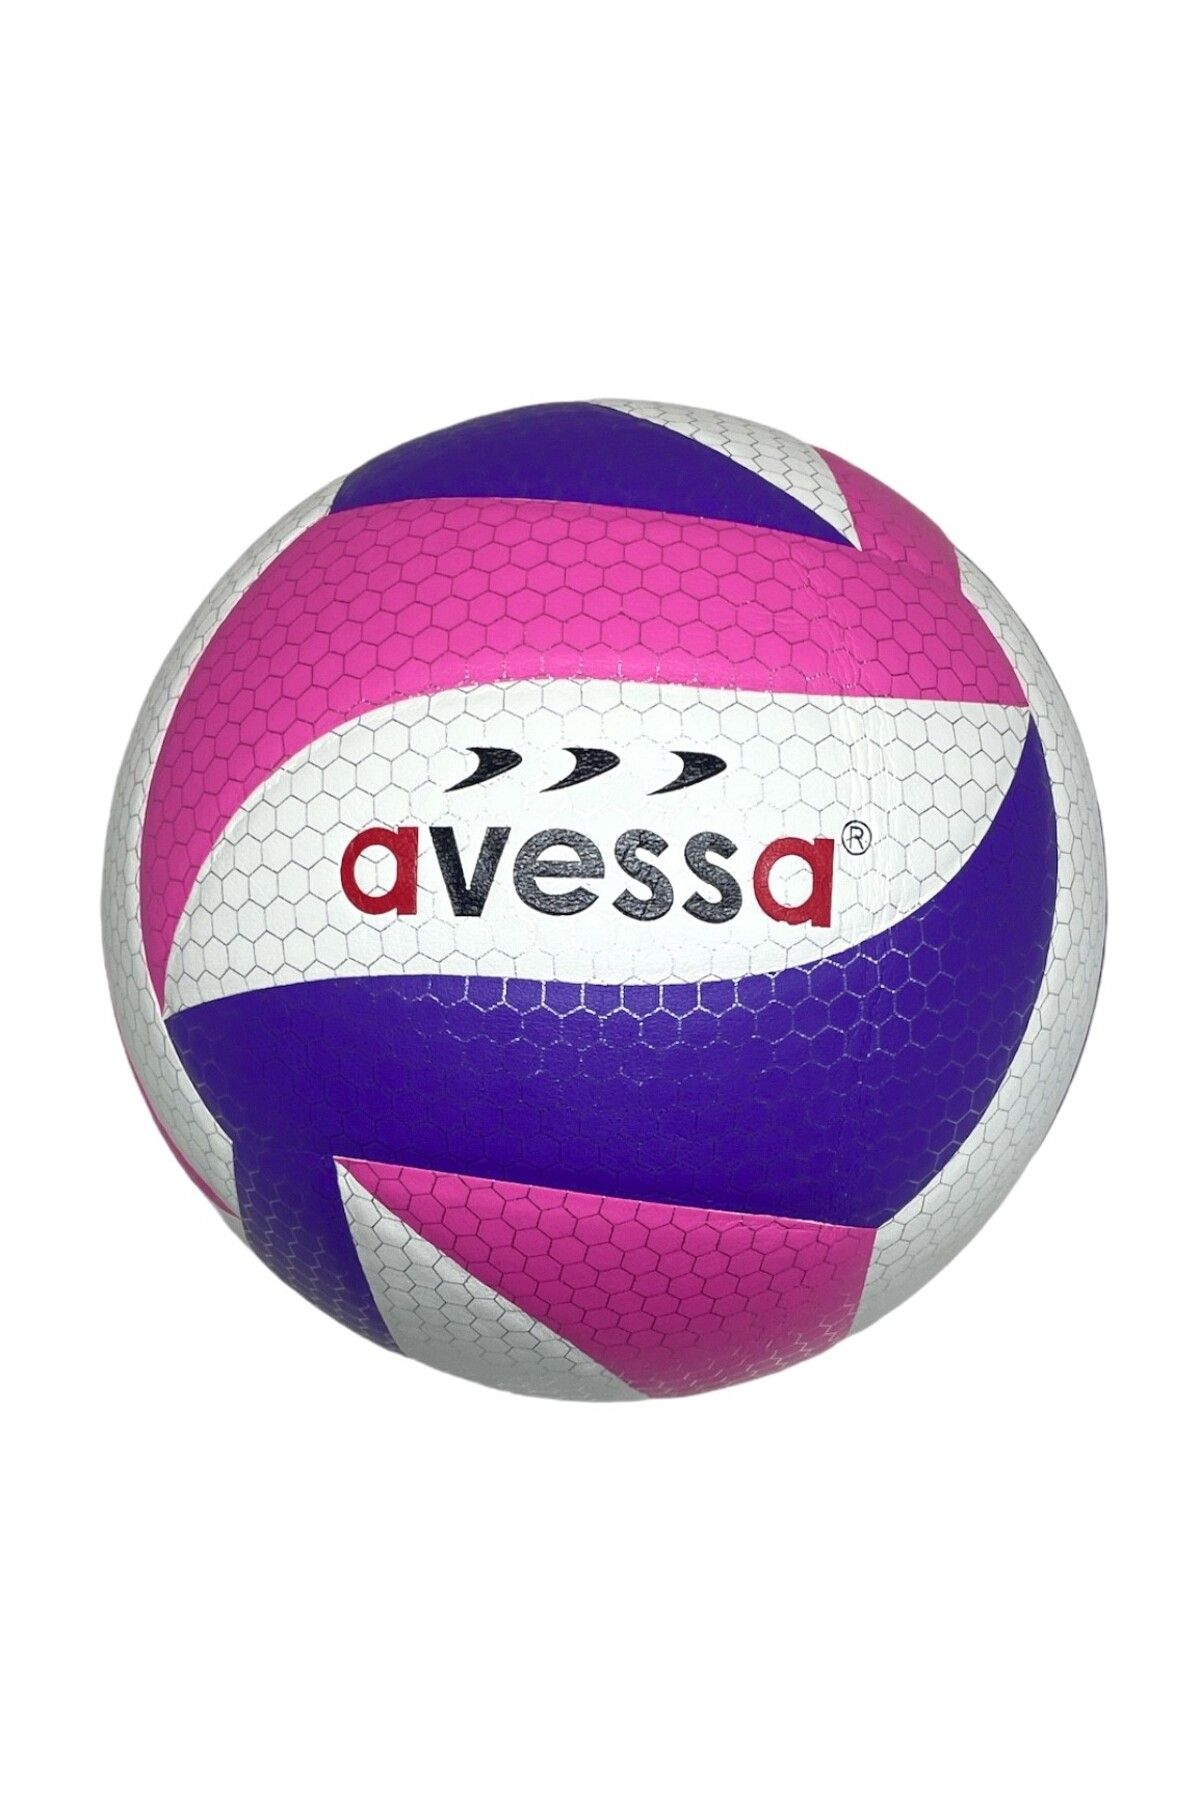 Avessa VL-900 Yumuşak Soft Doku Voleybol Topu Kaymaz Yüzey Yapıştırma 3 Astar 280 gr Maç Topu